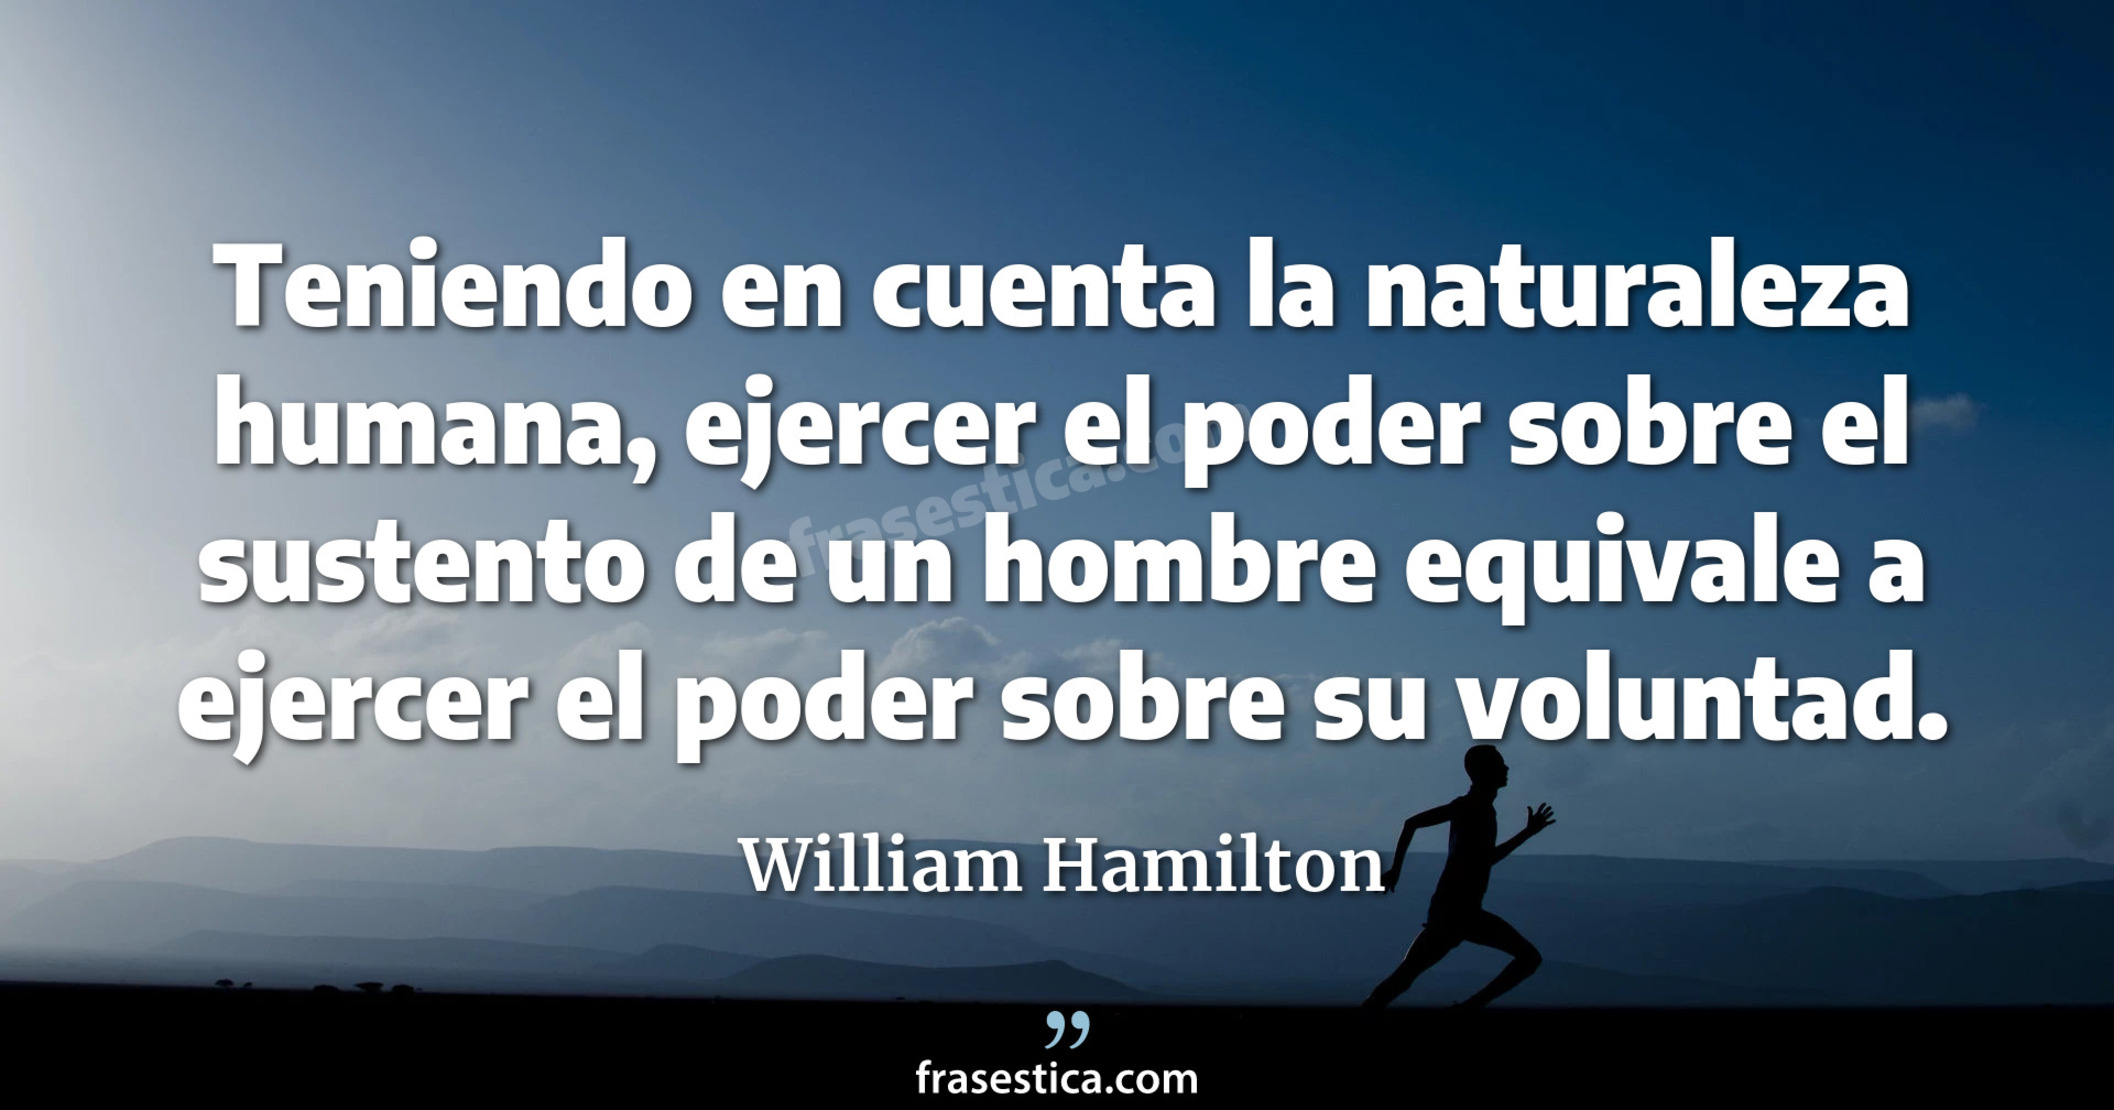 Teniendo en cuenta la naturaleza humana, ejercer el poder sobre el sustento de un hombre equivale a ejercer el poder sobre su voluntad. - William Hamilton